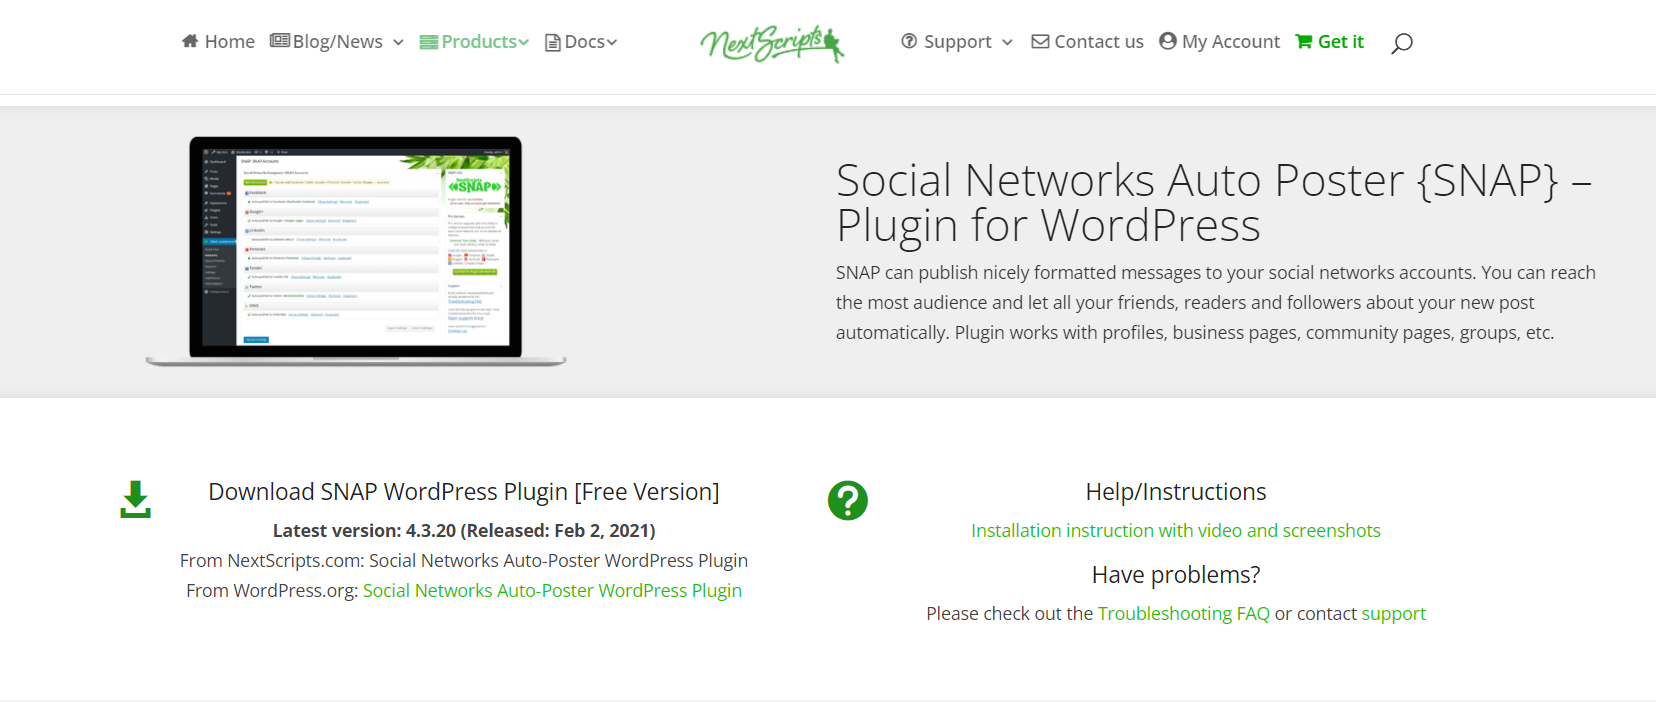 SNAP – Plugin for WordPress